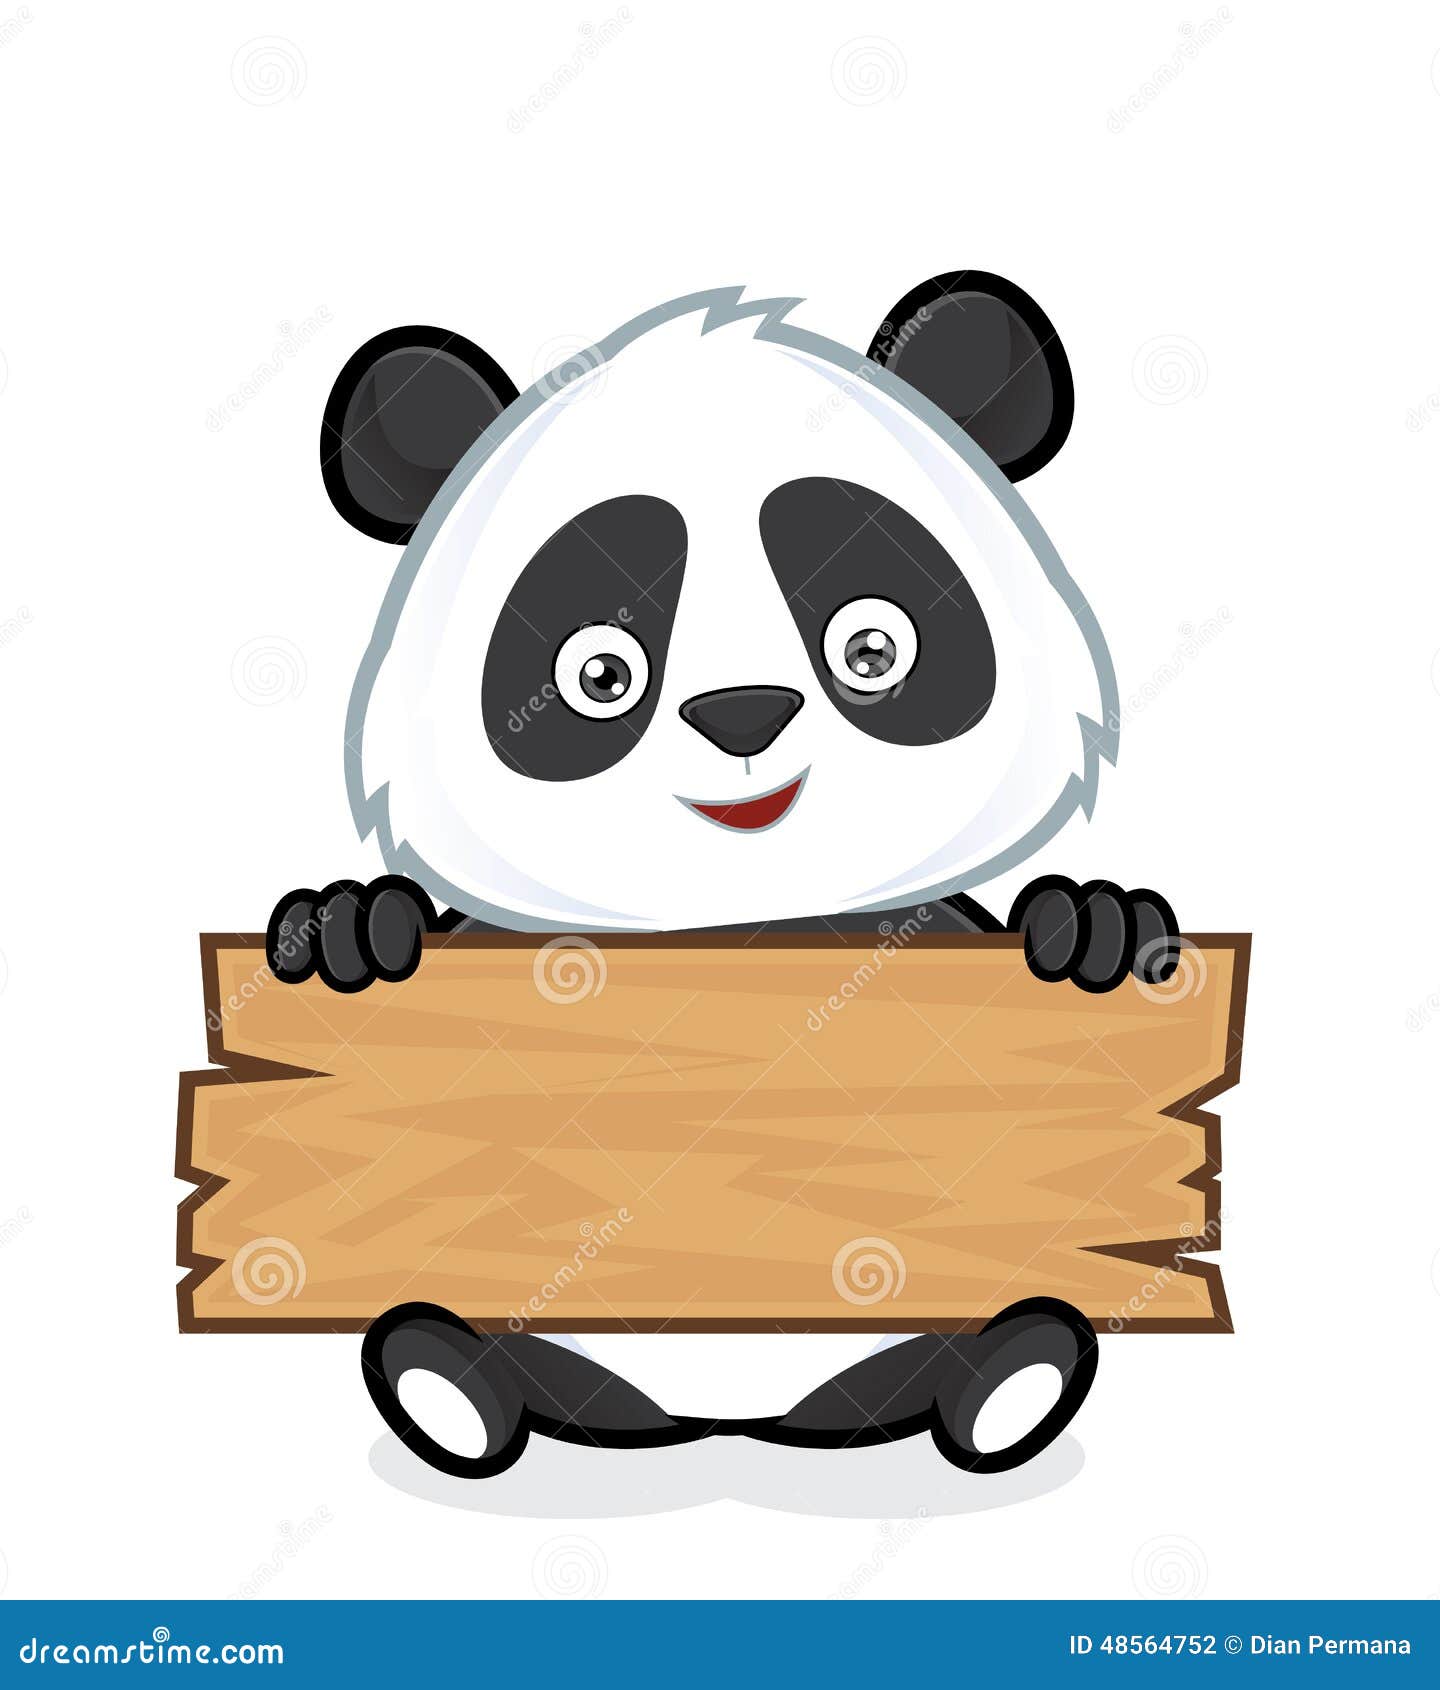 clipart panda website - photo #33